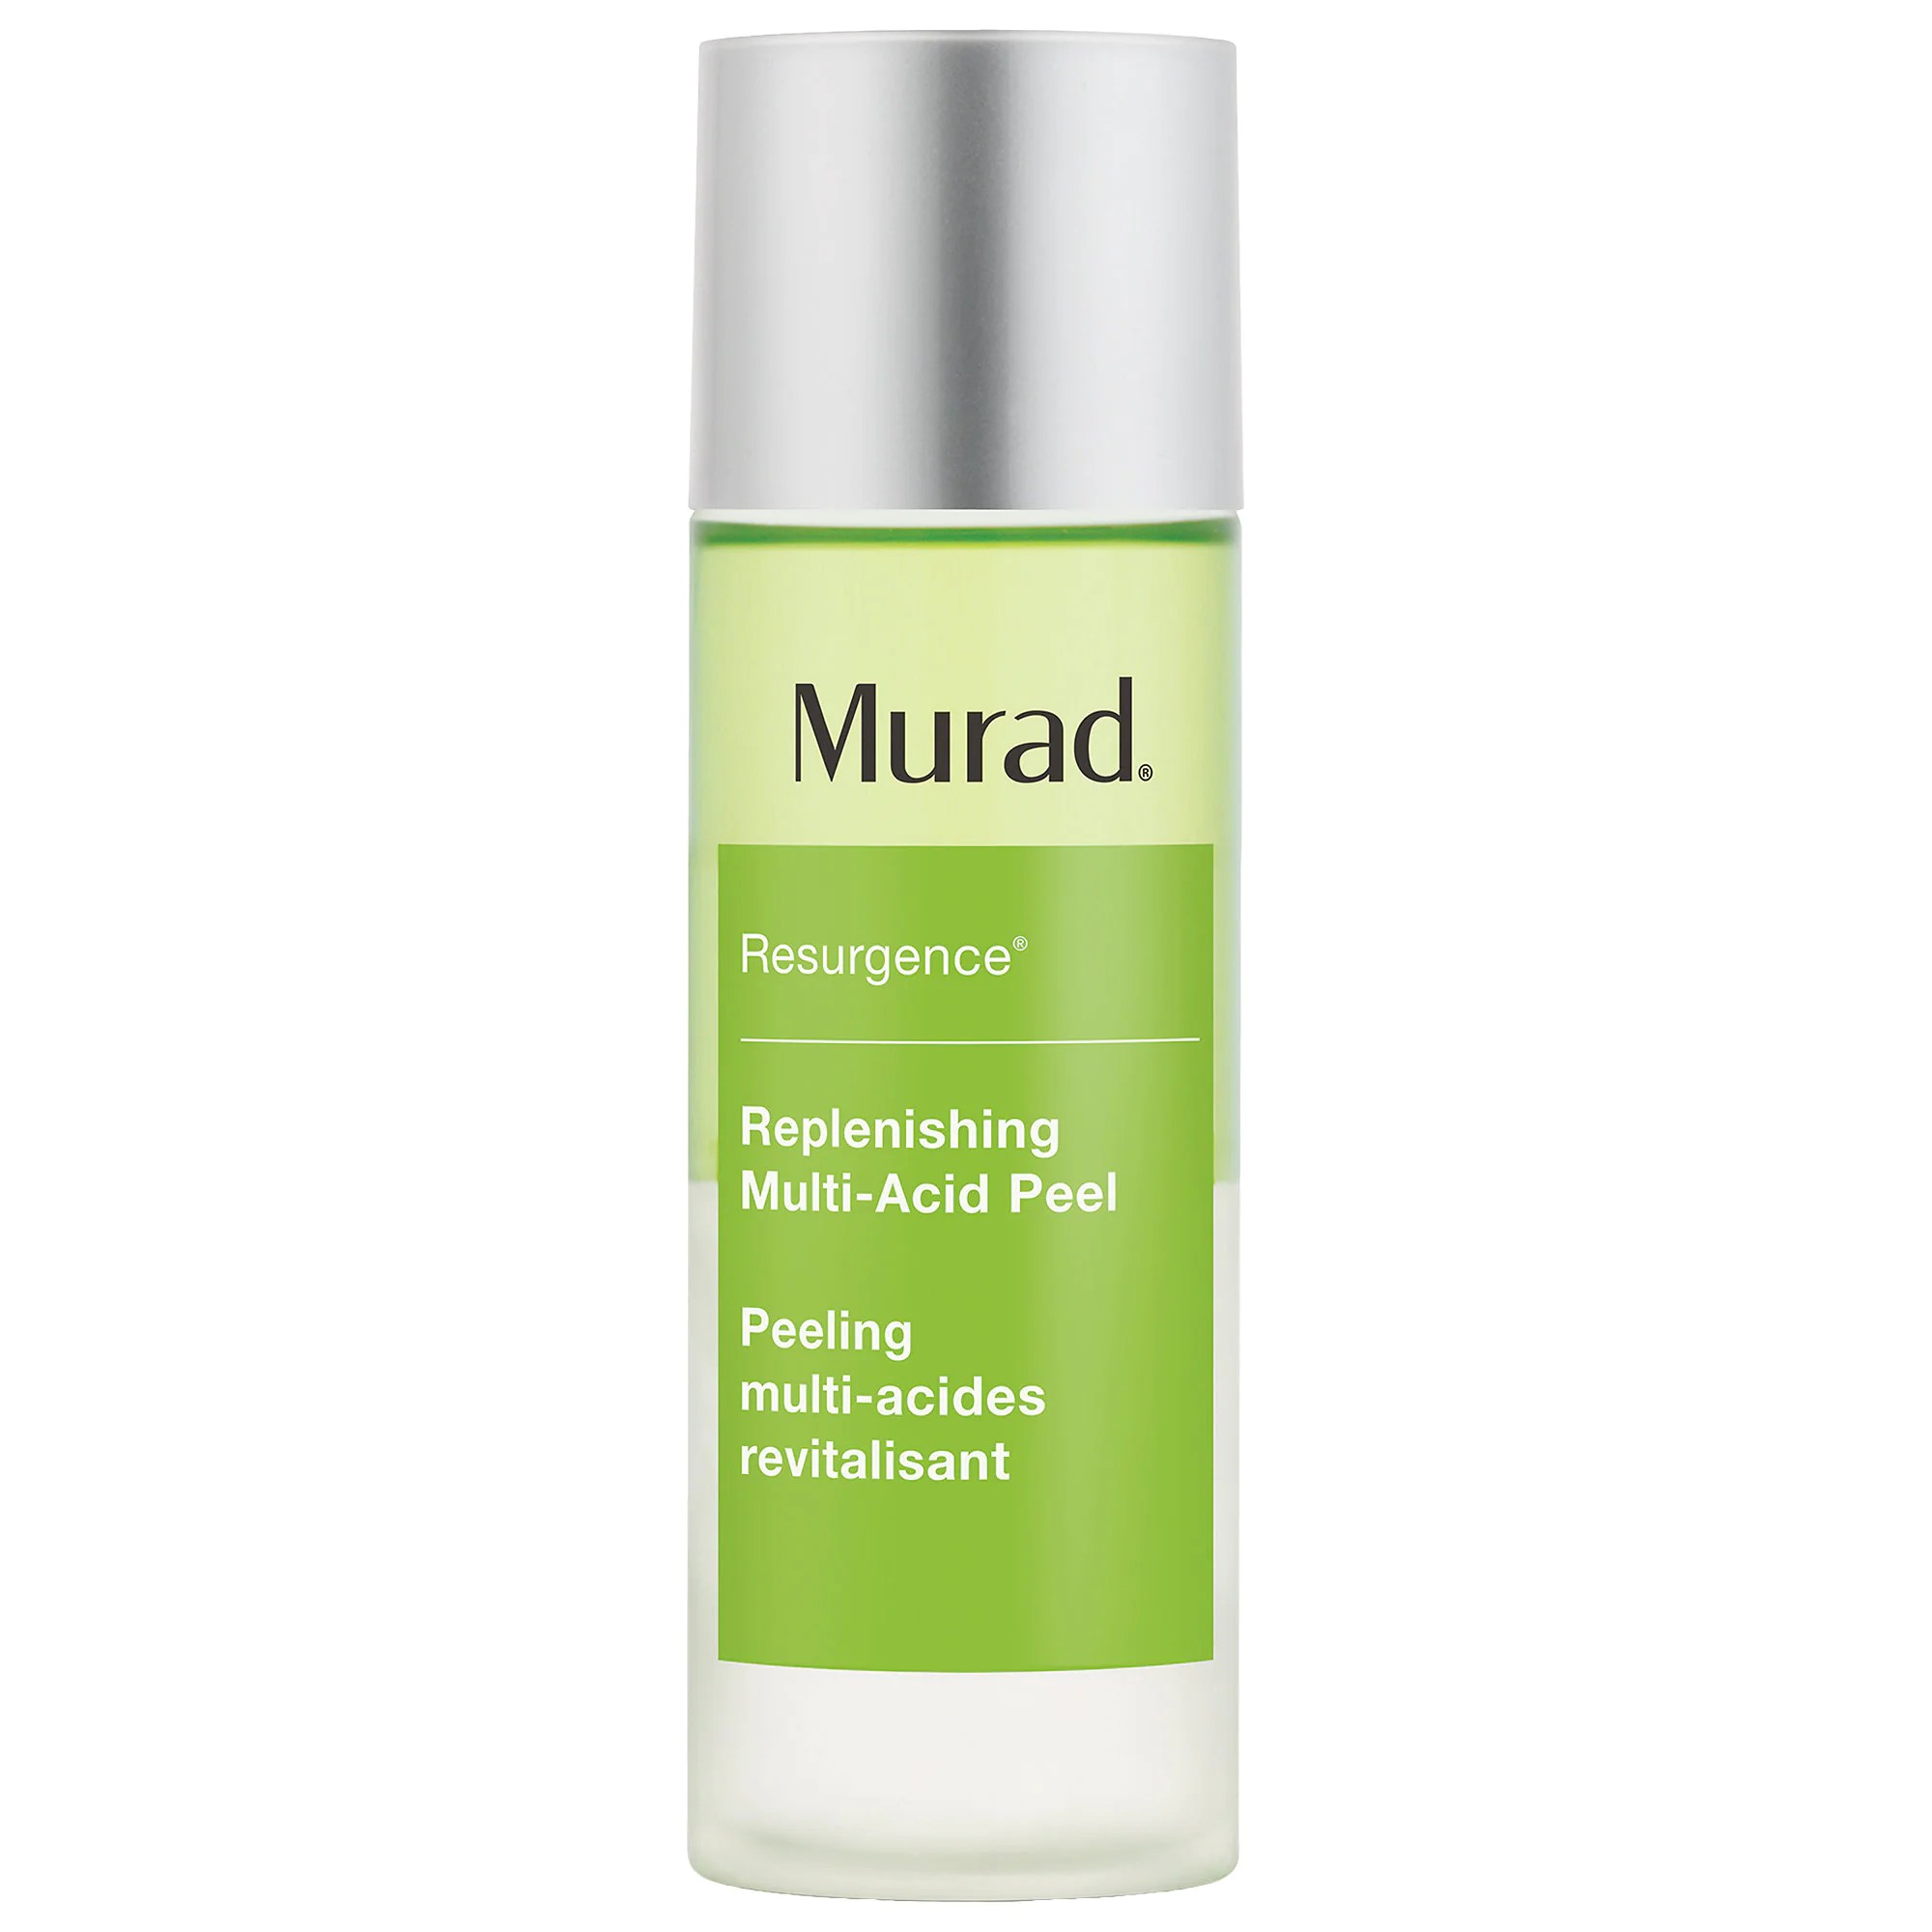 A bottle of Murad peel exfoliator for sensitive skin